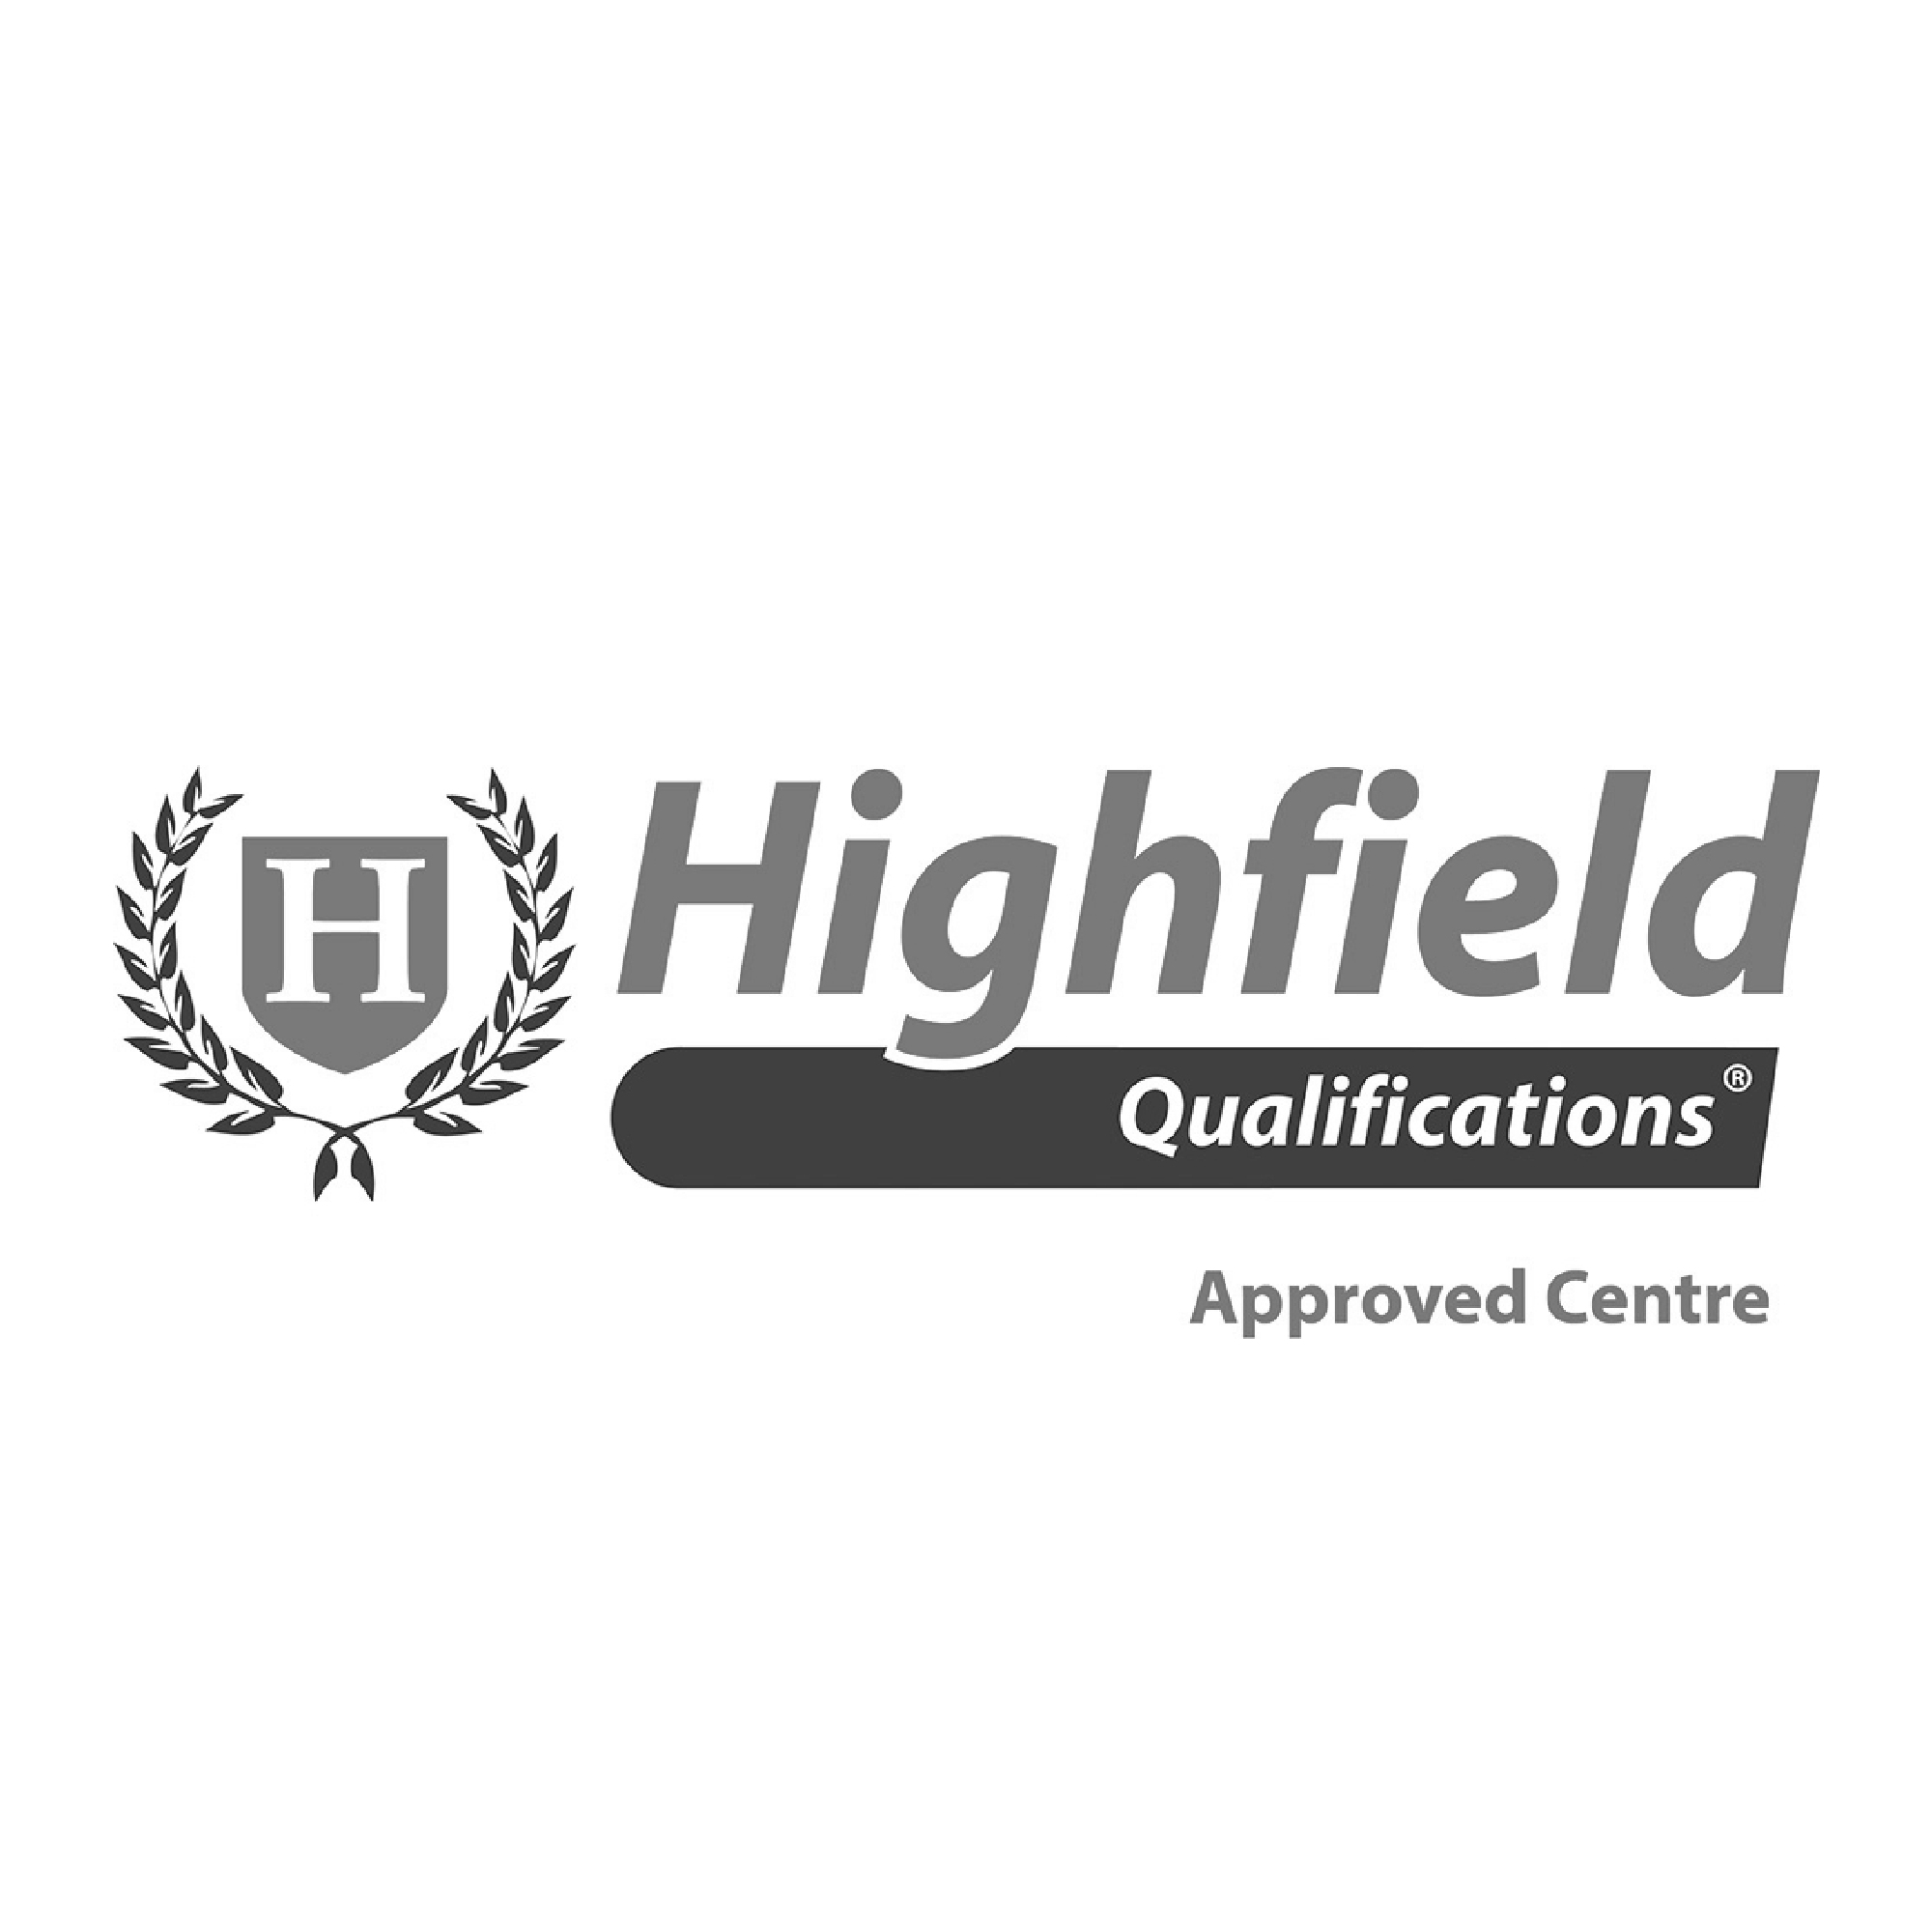 Highfield Qualifications (Copy) (Copy) (Copy) (Copy) (Copy)